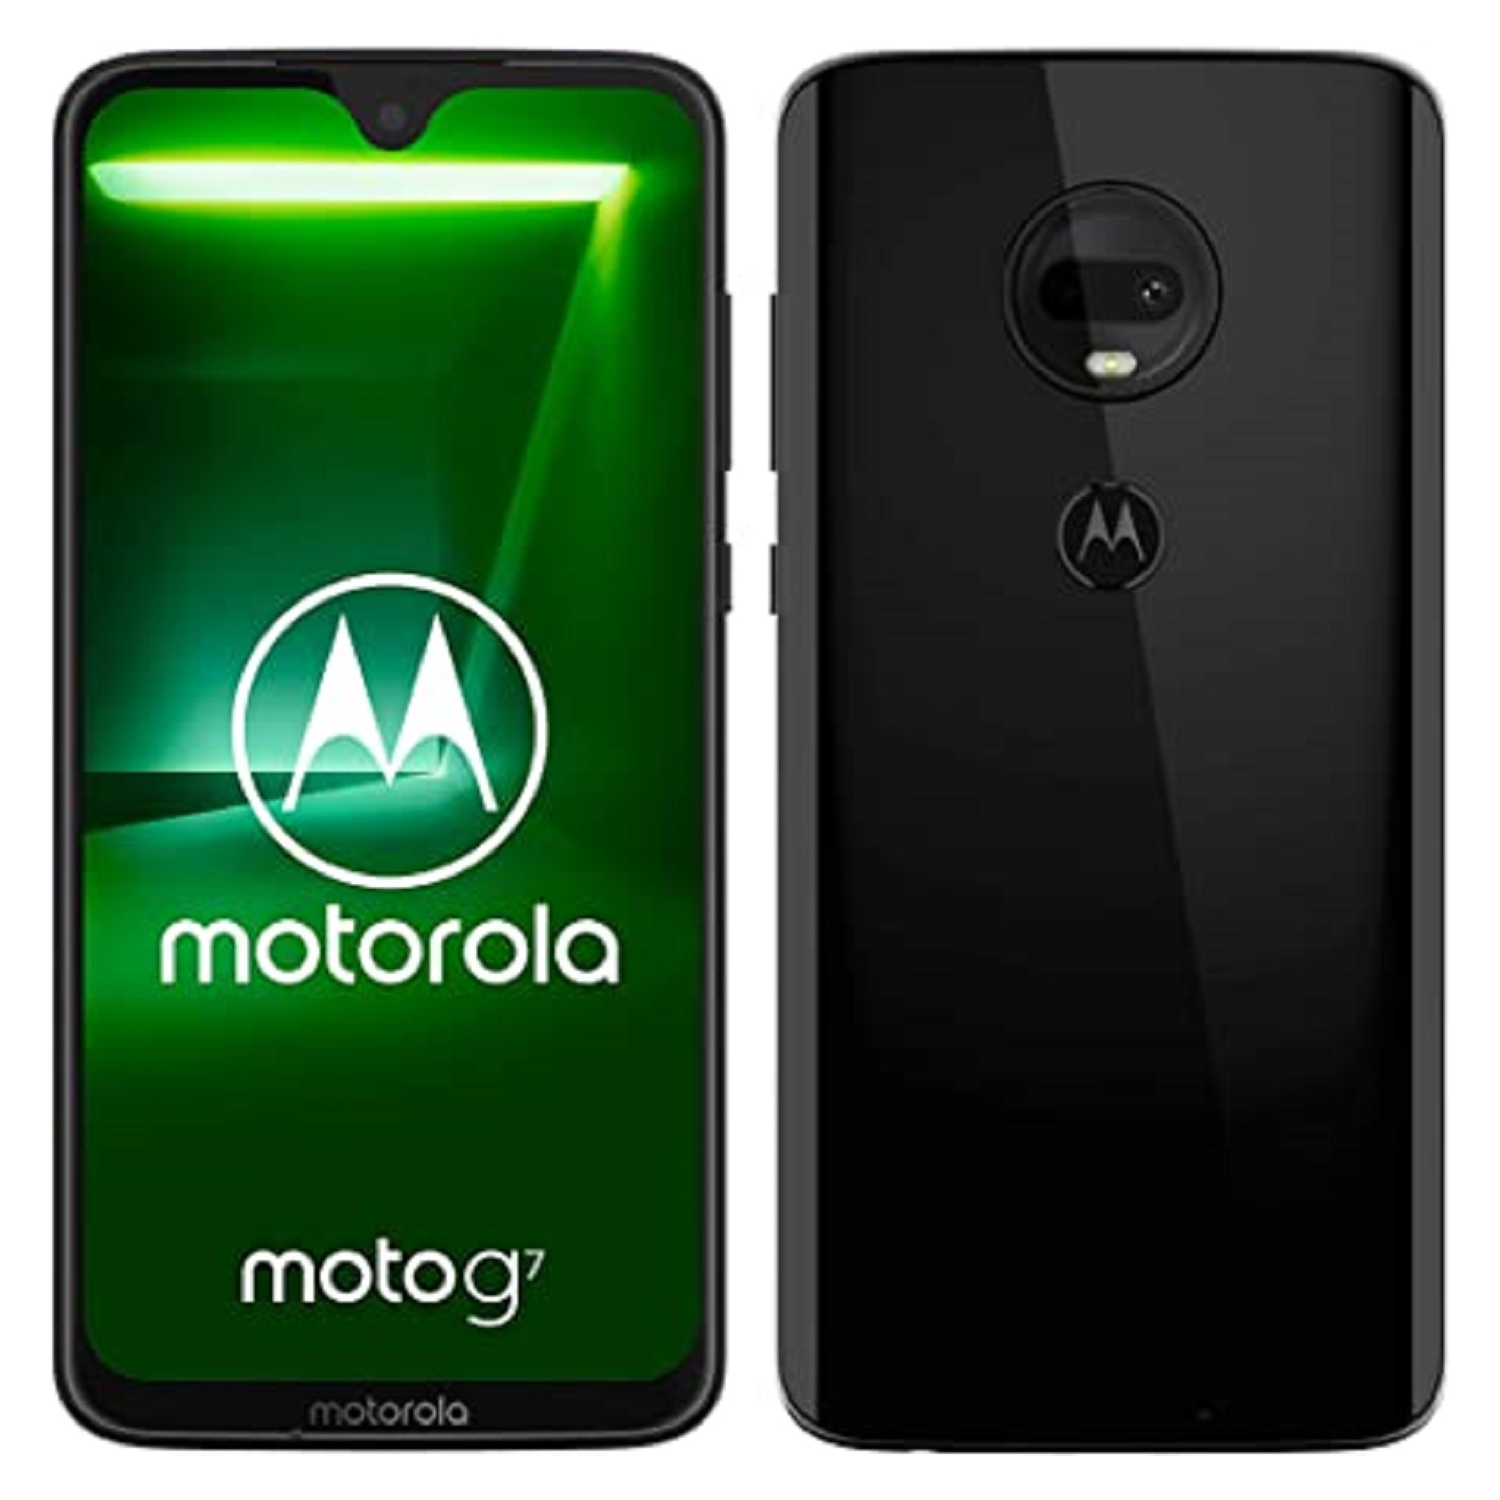 Motorola Moto G7 64GB/4GB 6.2" GSM Unlocked Smartphone (XT1962-4) - International Model - Ceramic Black - Brand New